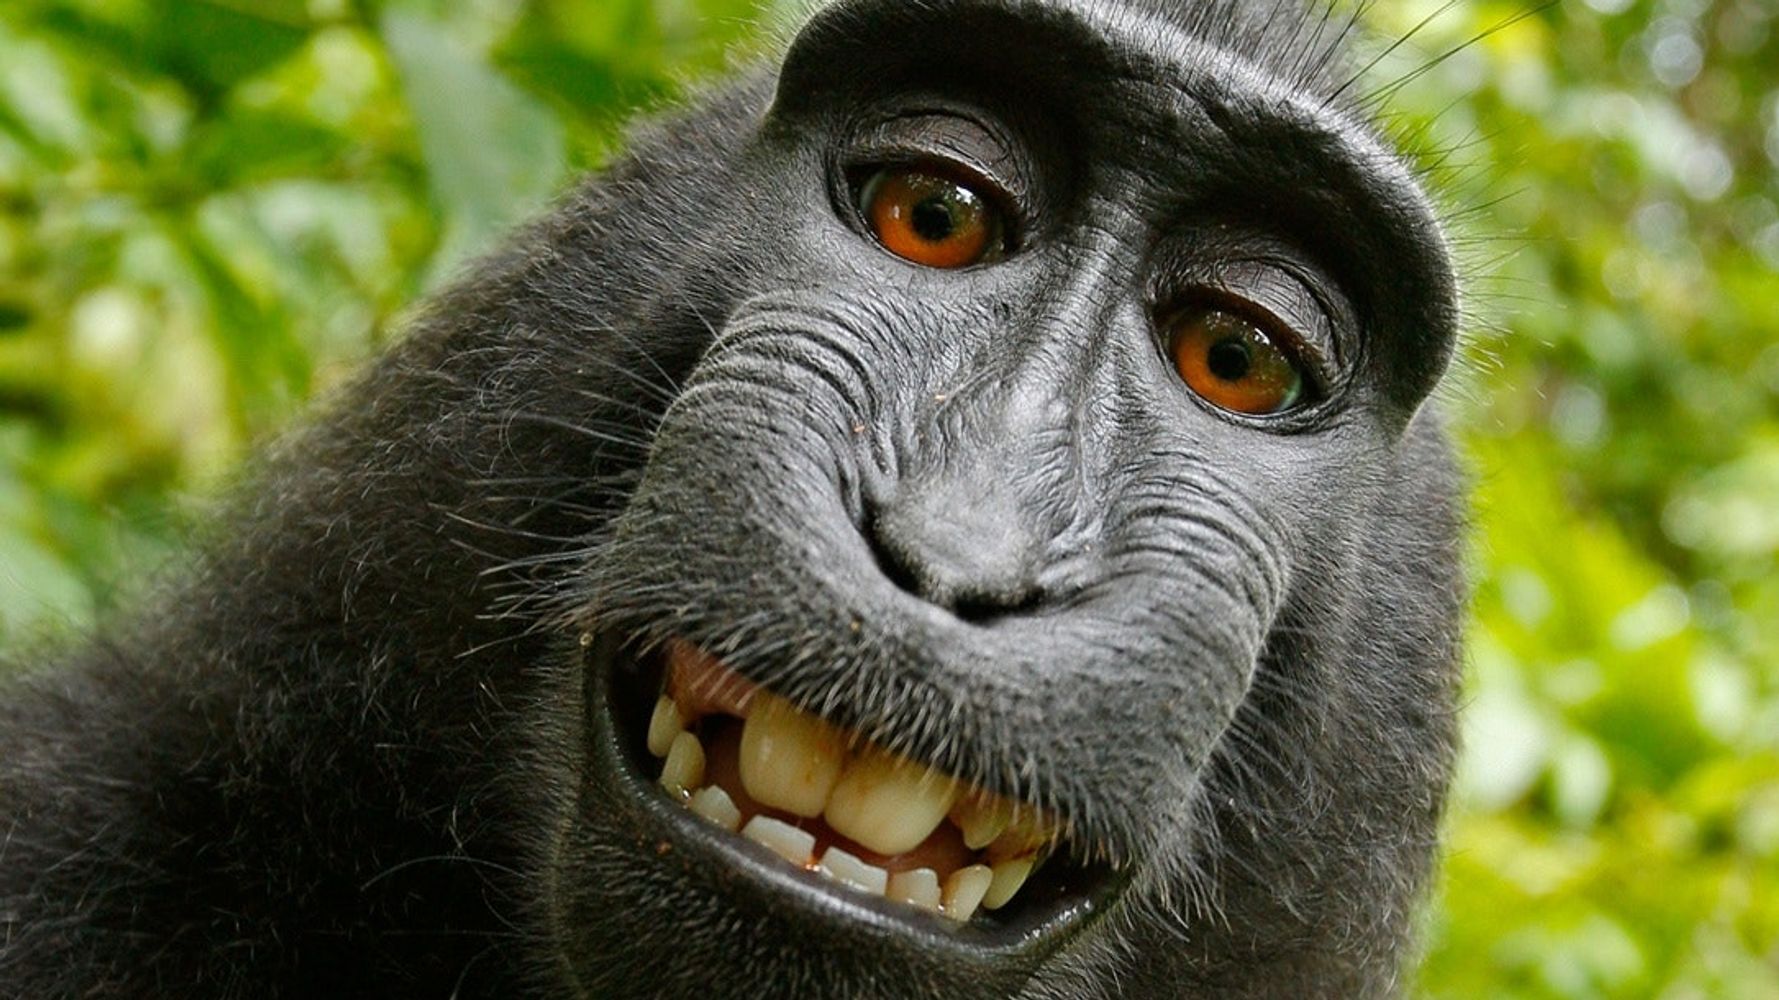 Cheeky Black Monkey Smiling